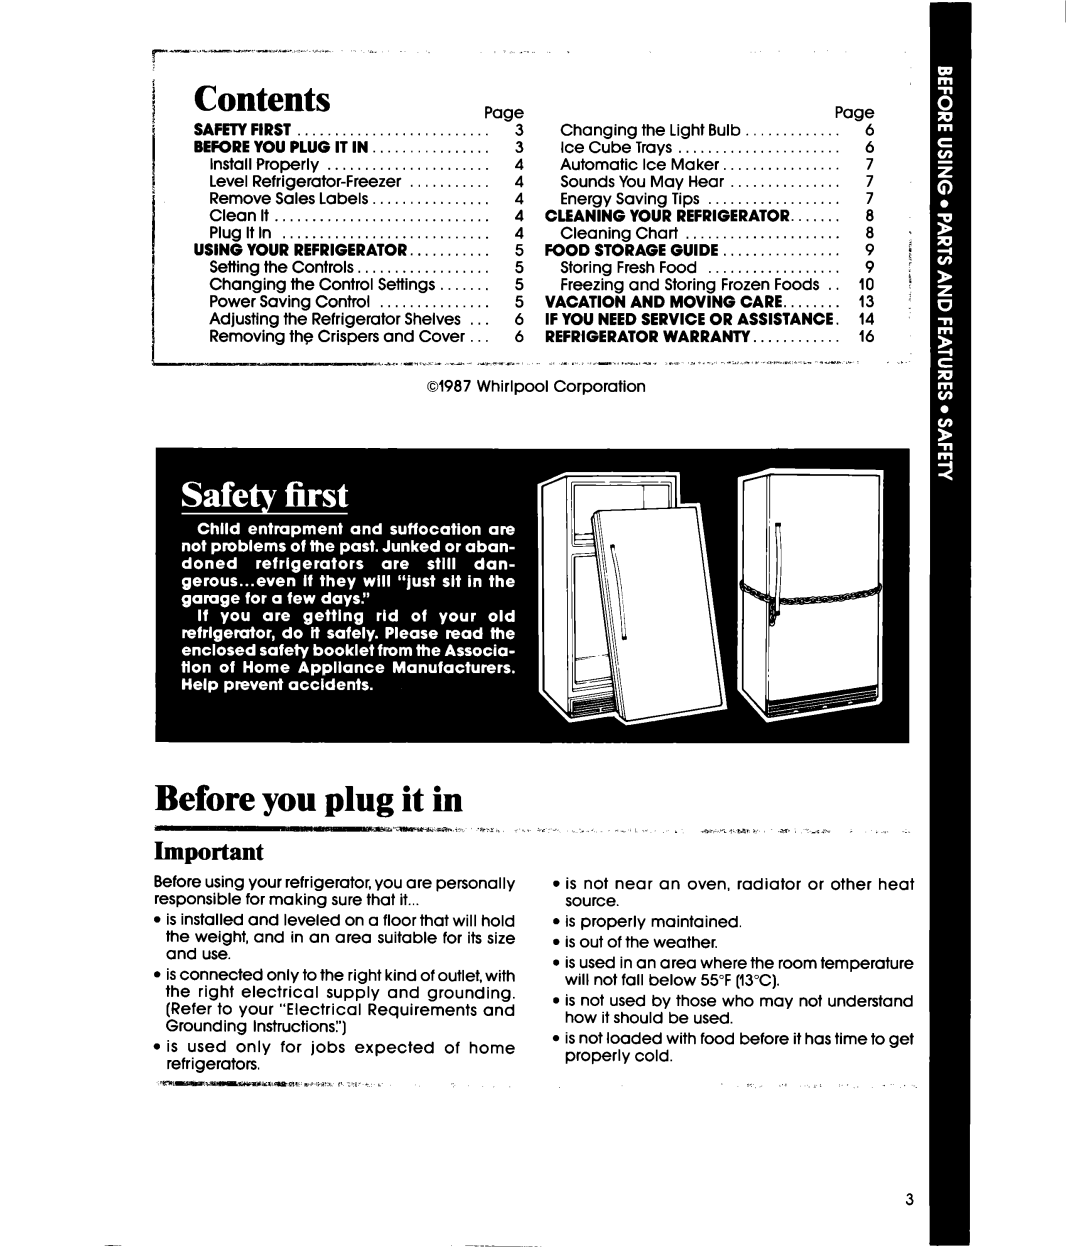 Whirlpool ETl6JK manual Contents, Before you plug it in 